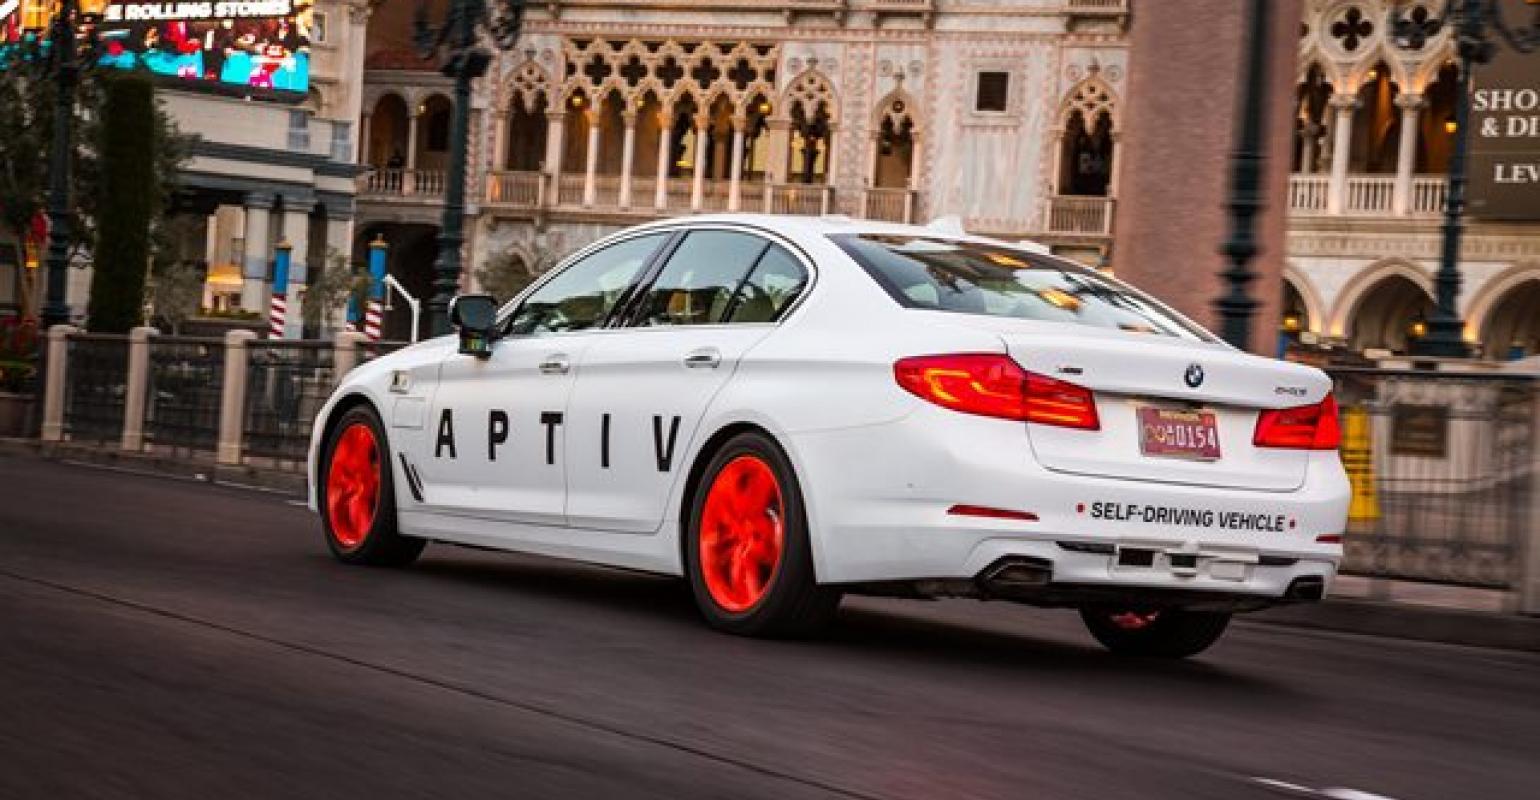 Aptiv Delphi Logo - Aptiv | Former Delphi Electronics Pursues Leadership in New Mobility ...